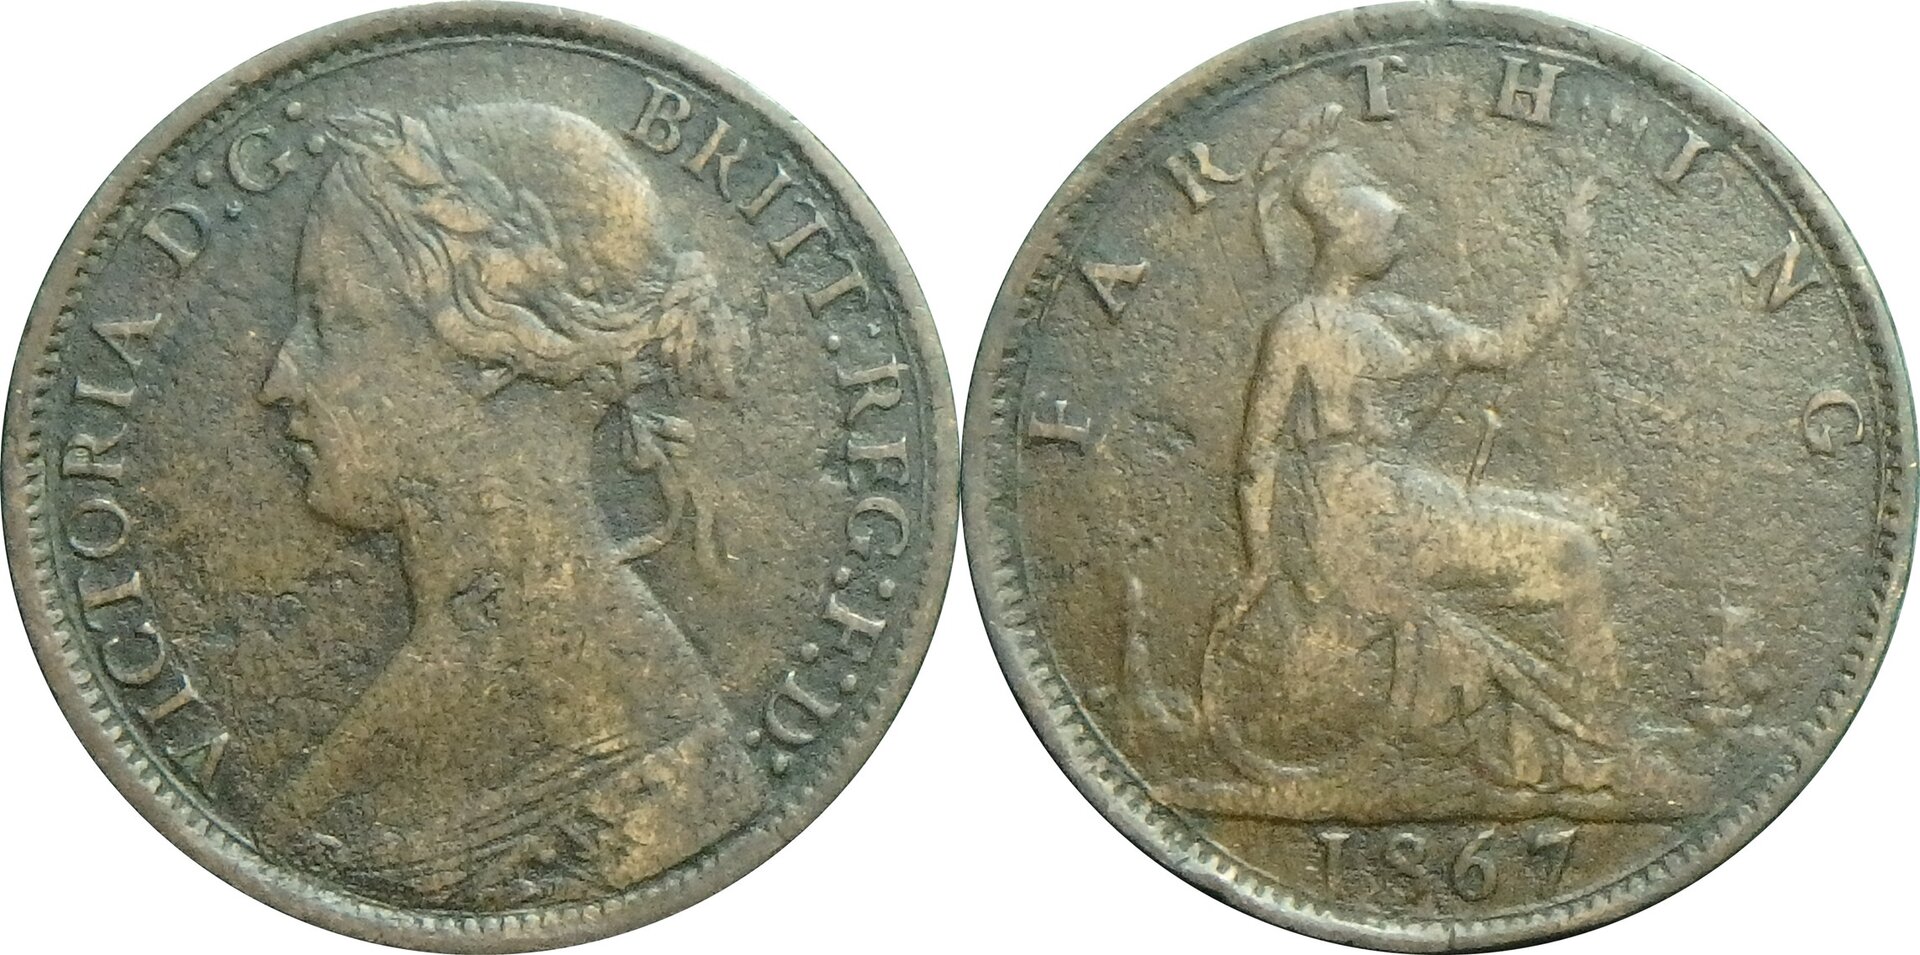 1867 GB farthing.jpg